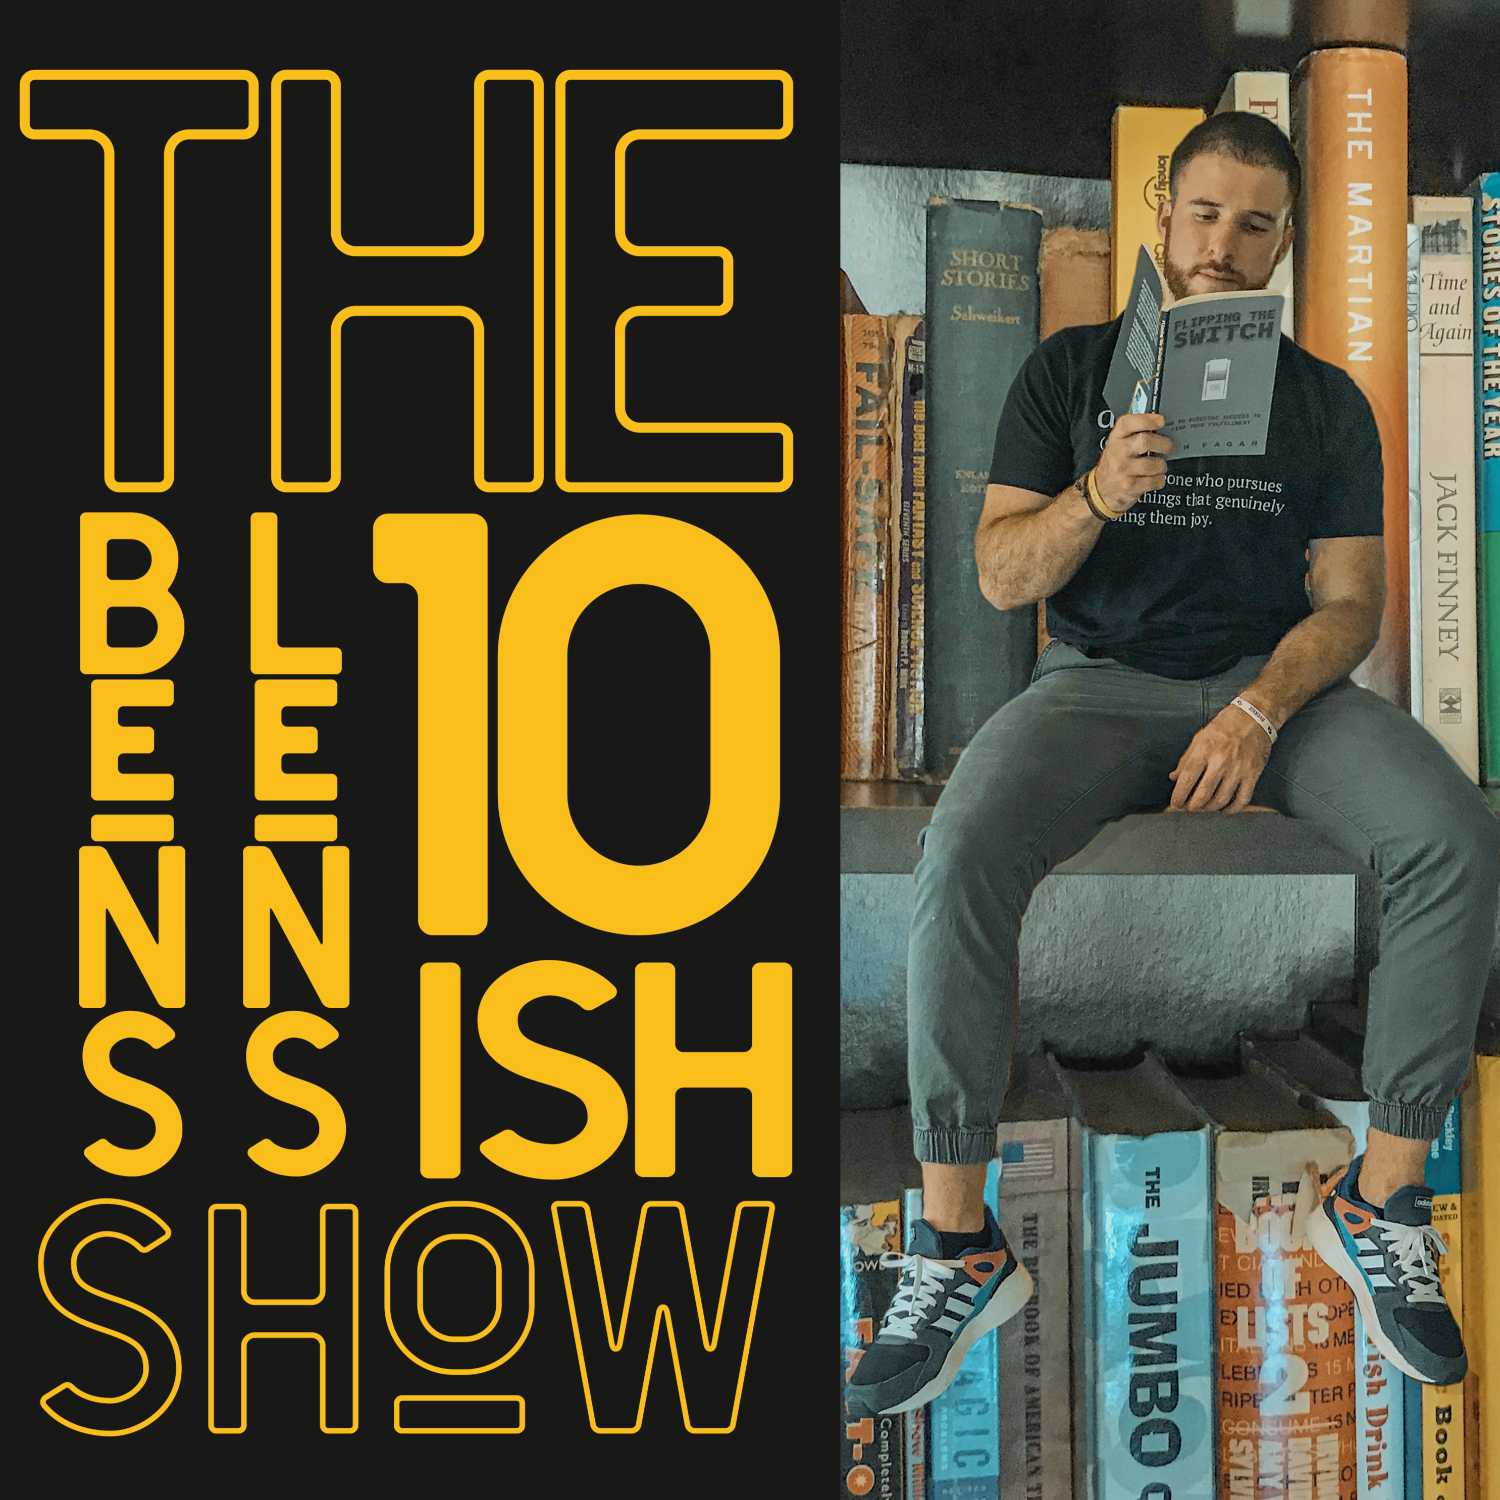 The BensLens10ish Show